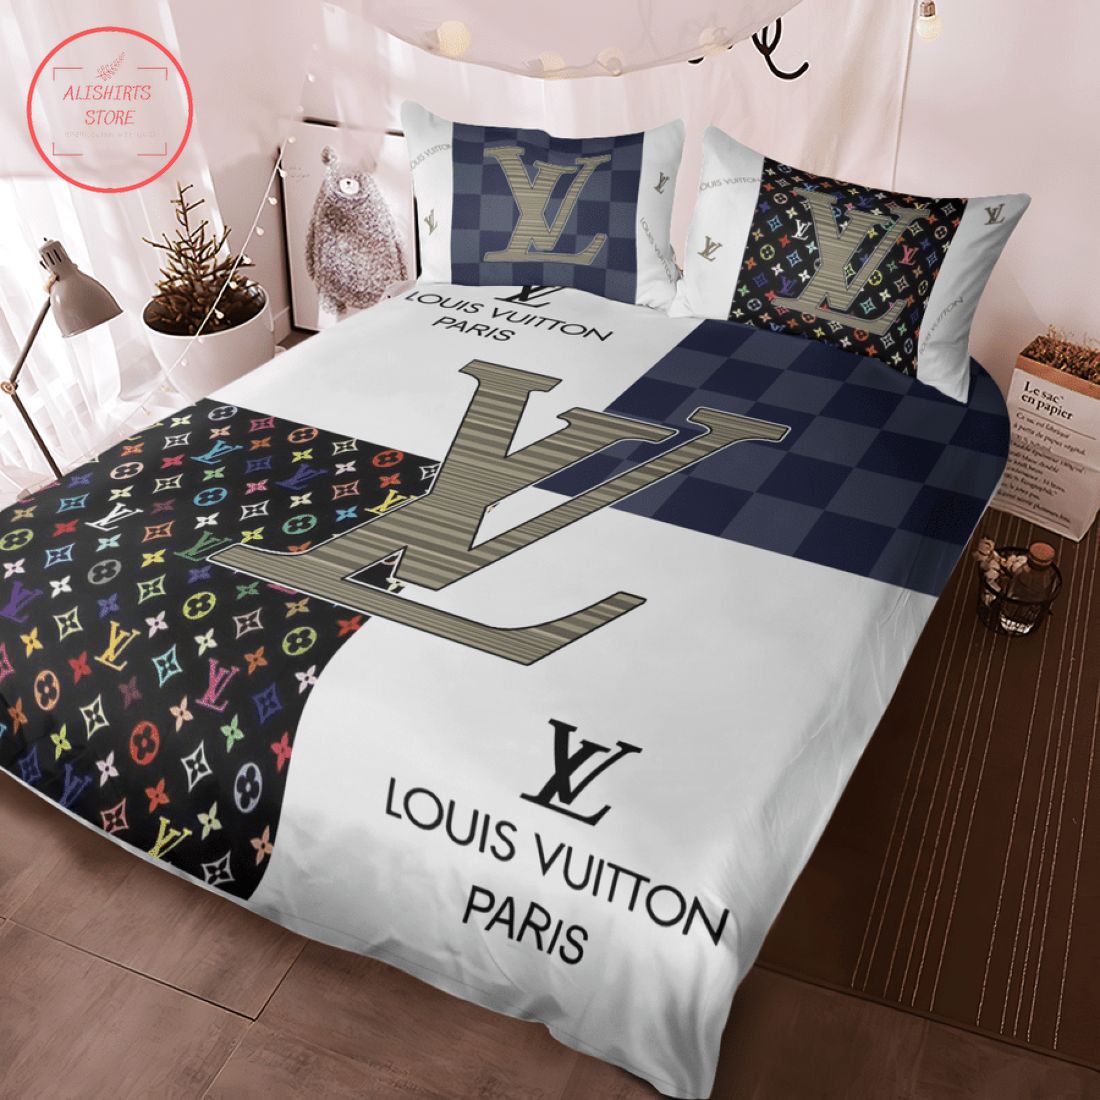 Louis Vuitton Paris Luxury Brand Quilt Bedding Set